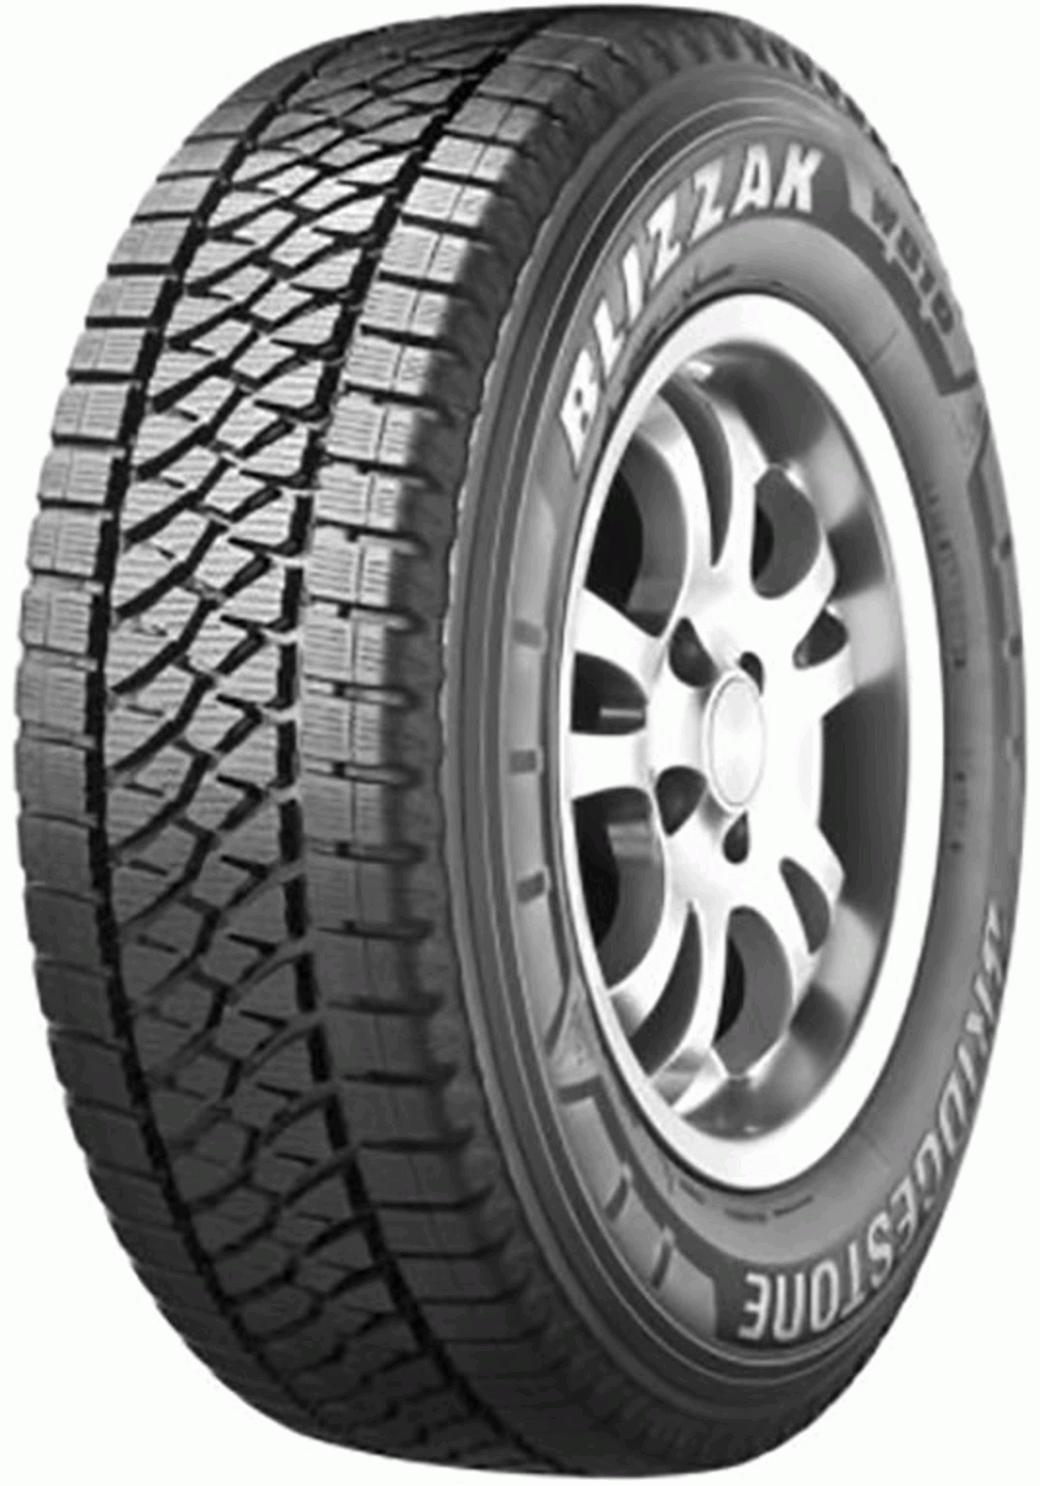 and Tests Tire W810 Bridgestone Reviews - Blizzak